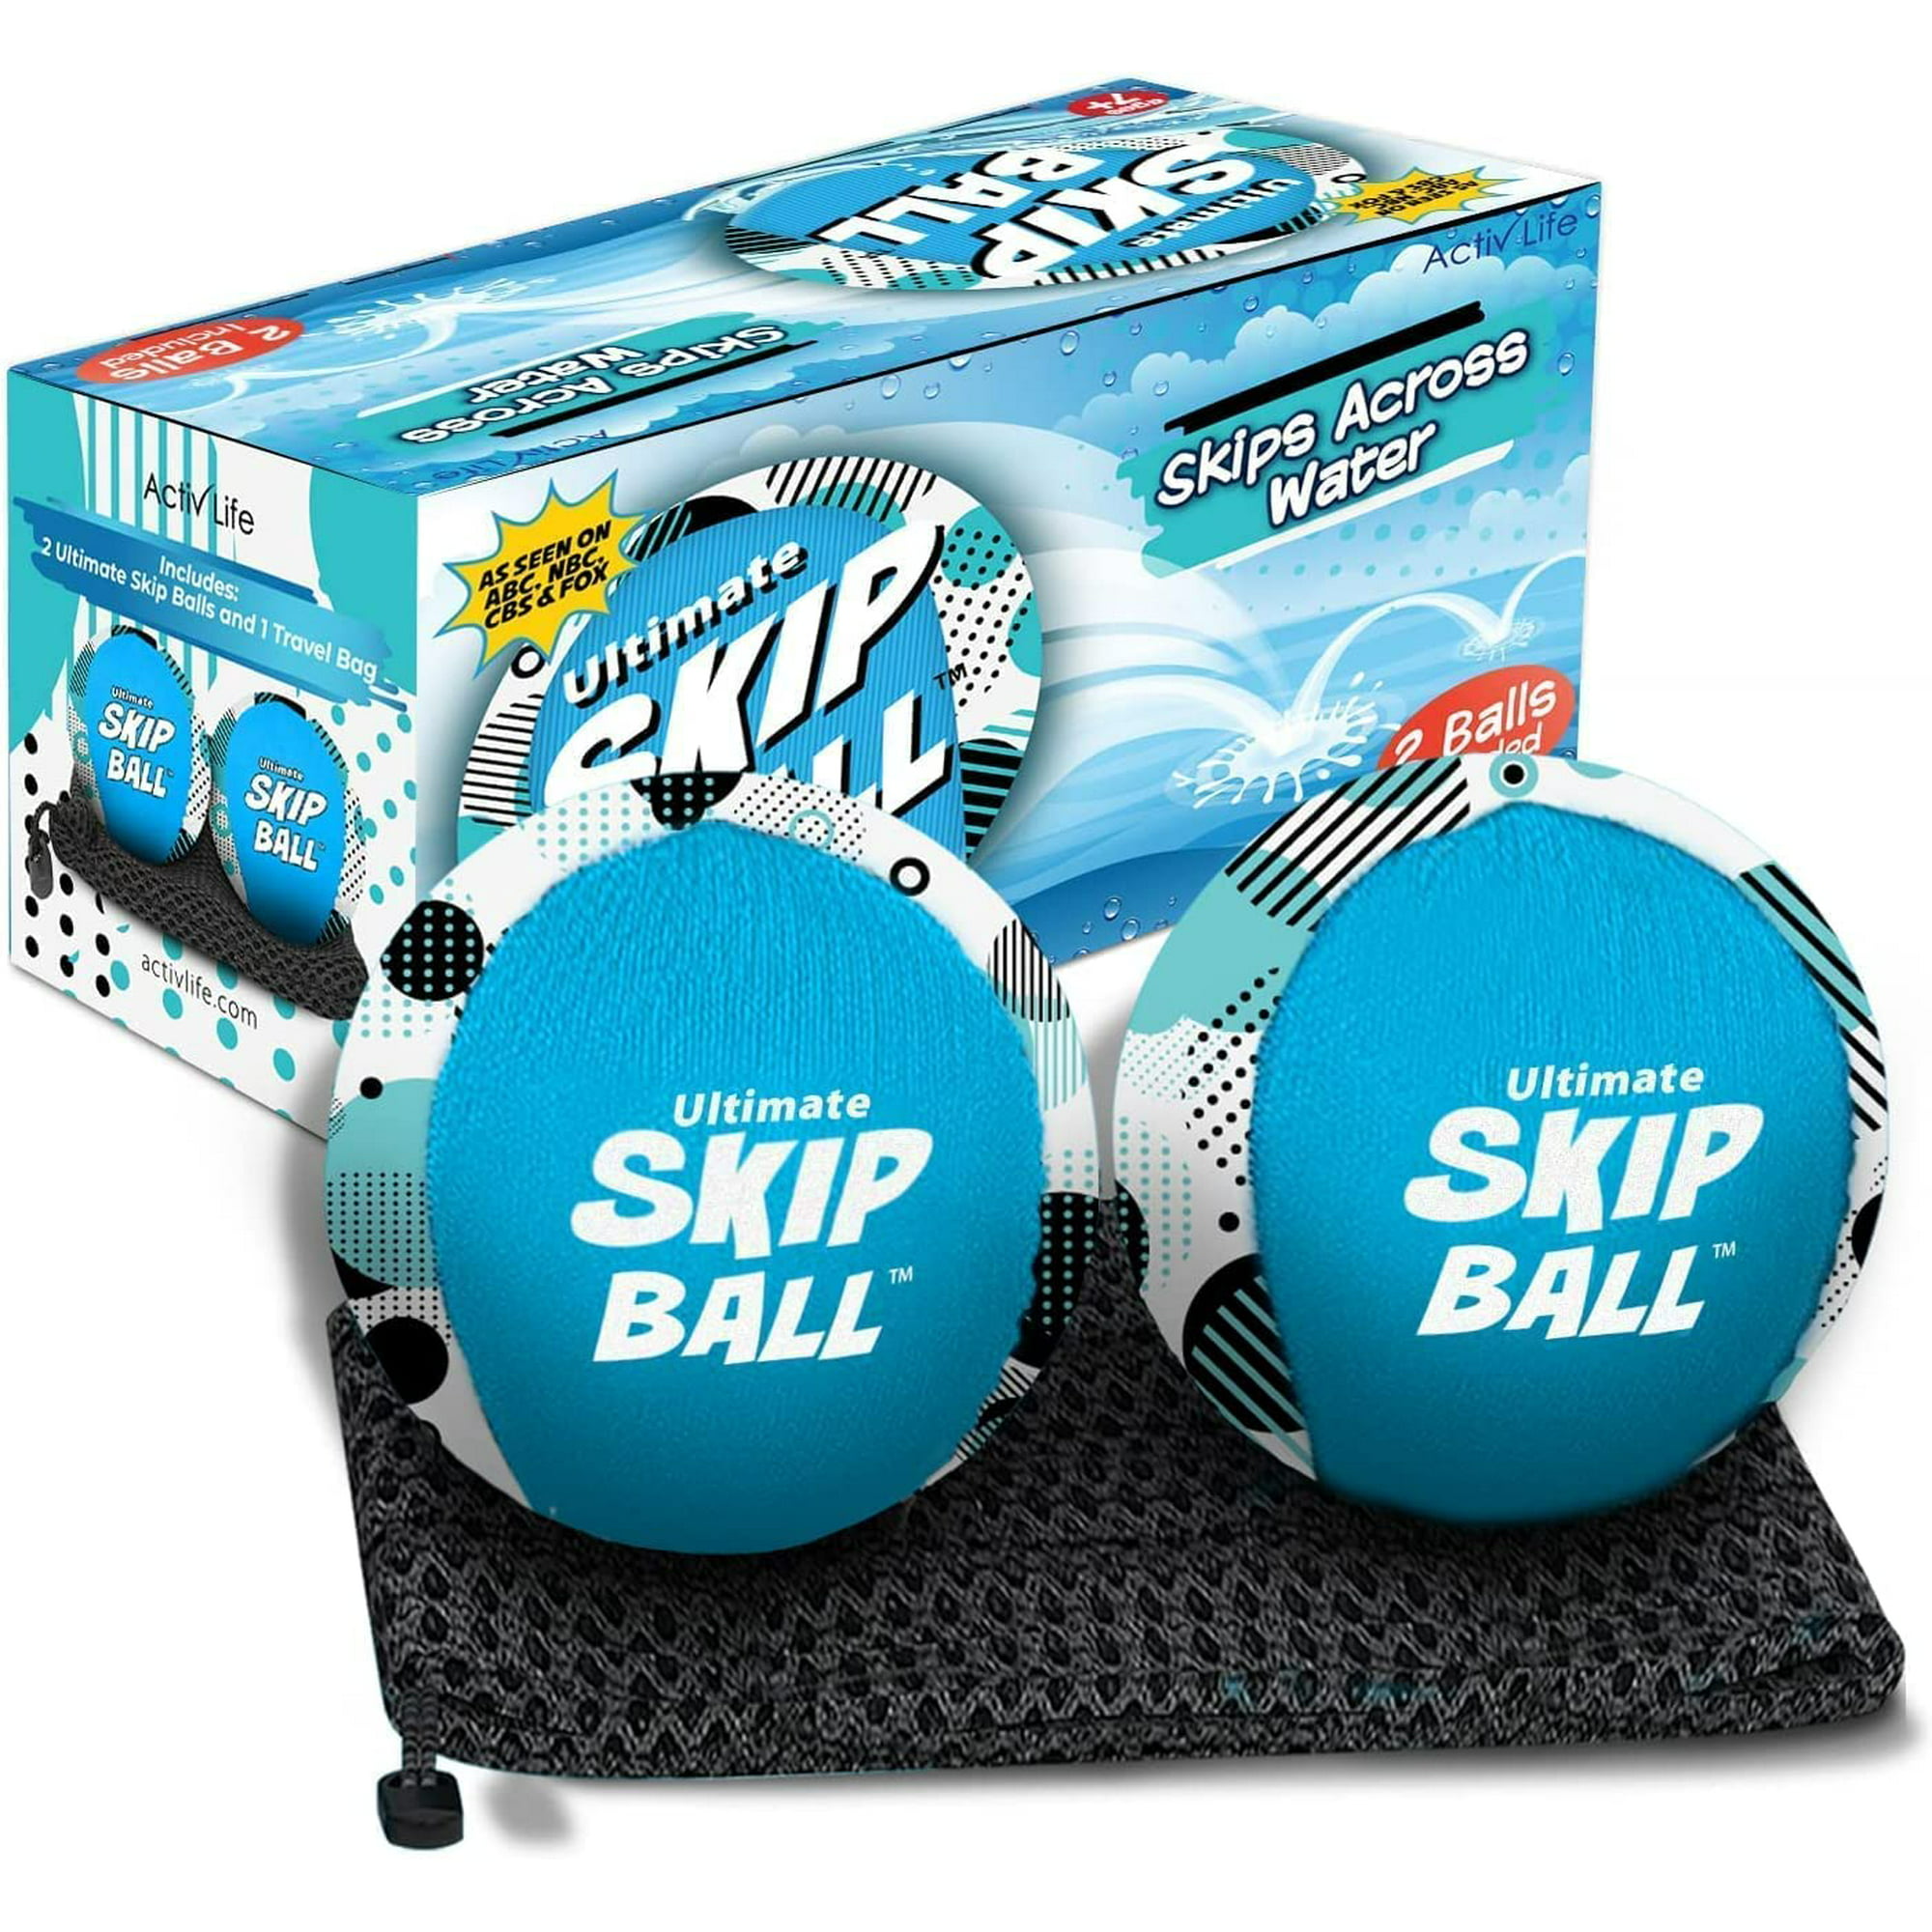 The Ultimate Skip Ball Water Bouncing Ball (lot de 2) – Idéal pour